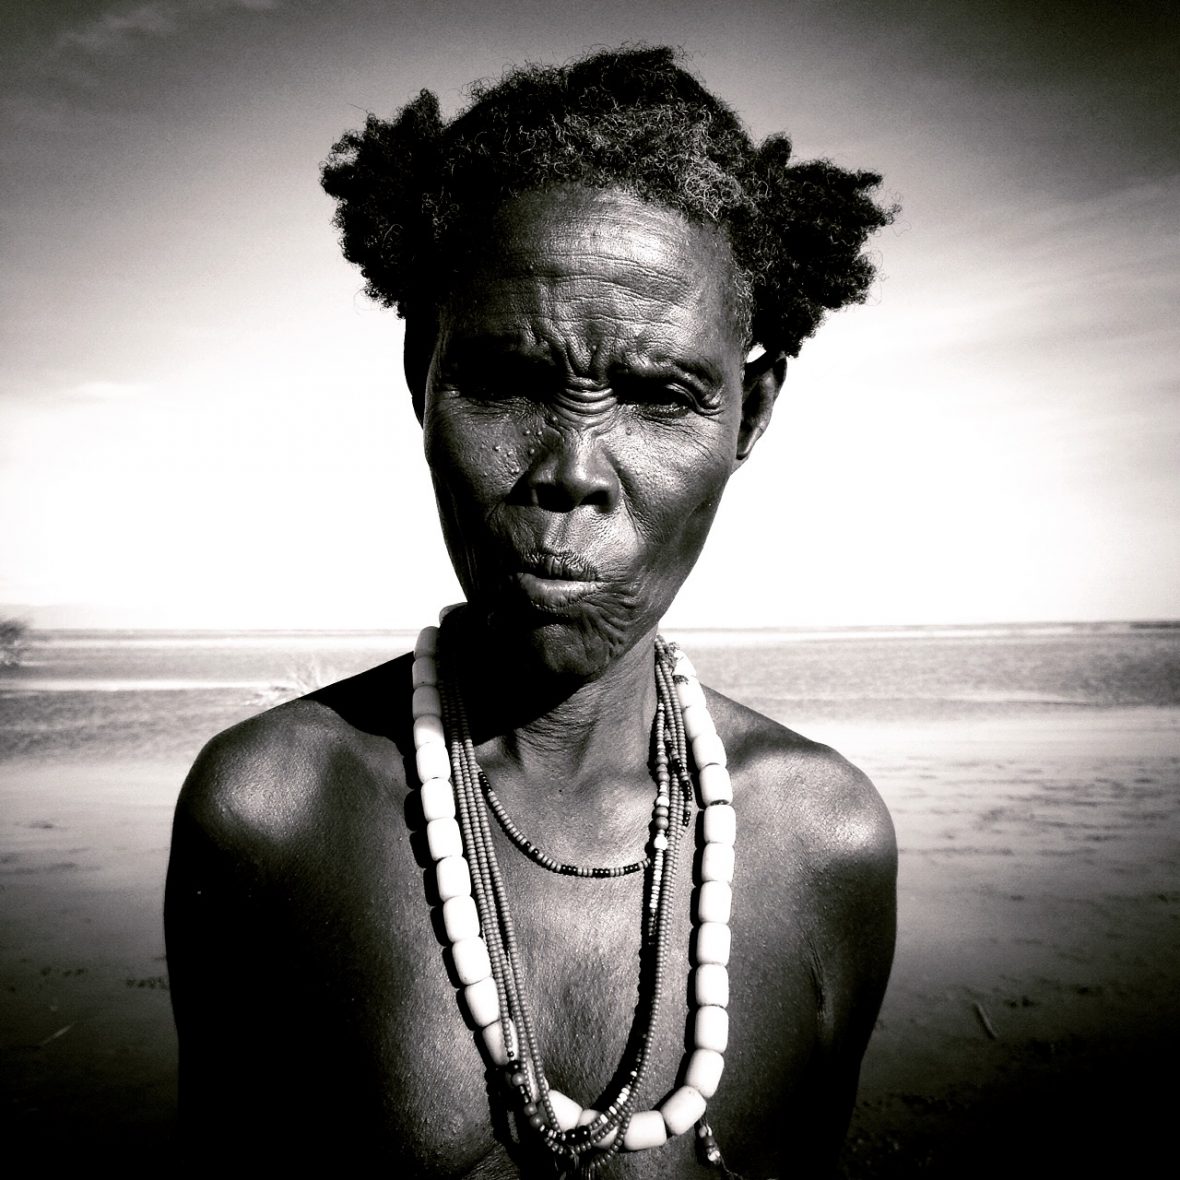 A Daasanach woman photographed by Neil Shea in Kenya, Africa.